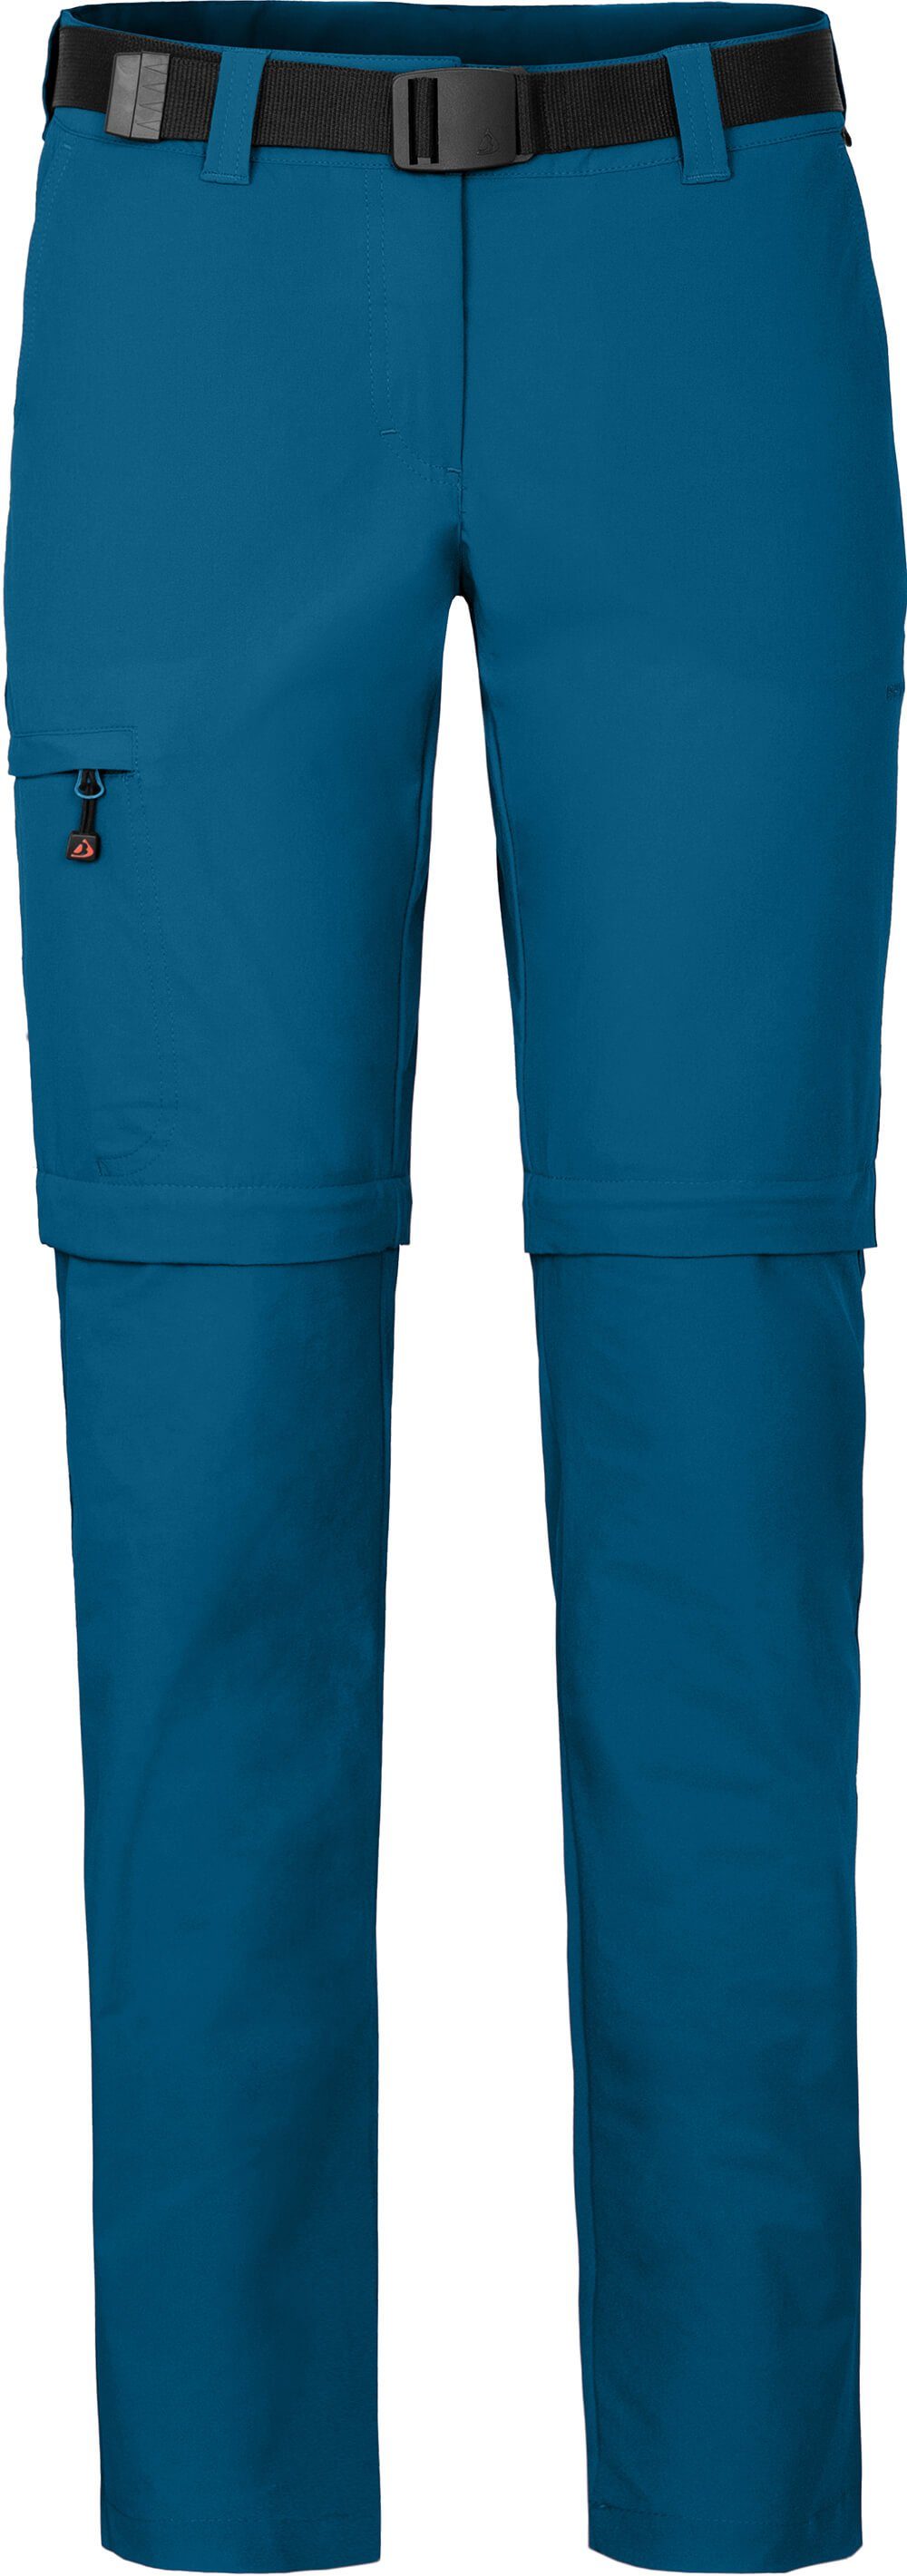 Saphir (slim) Normalgrößen, Zip-off-Hose vielseitig, blau BENNETT Damen pflegeleicht, Zipp-Off Wanderhose, Bergson